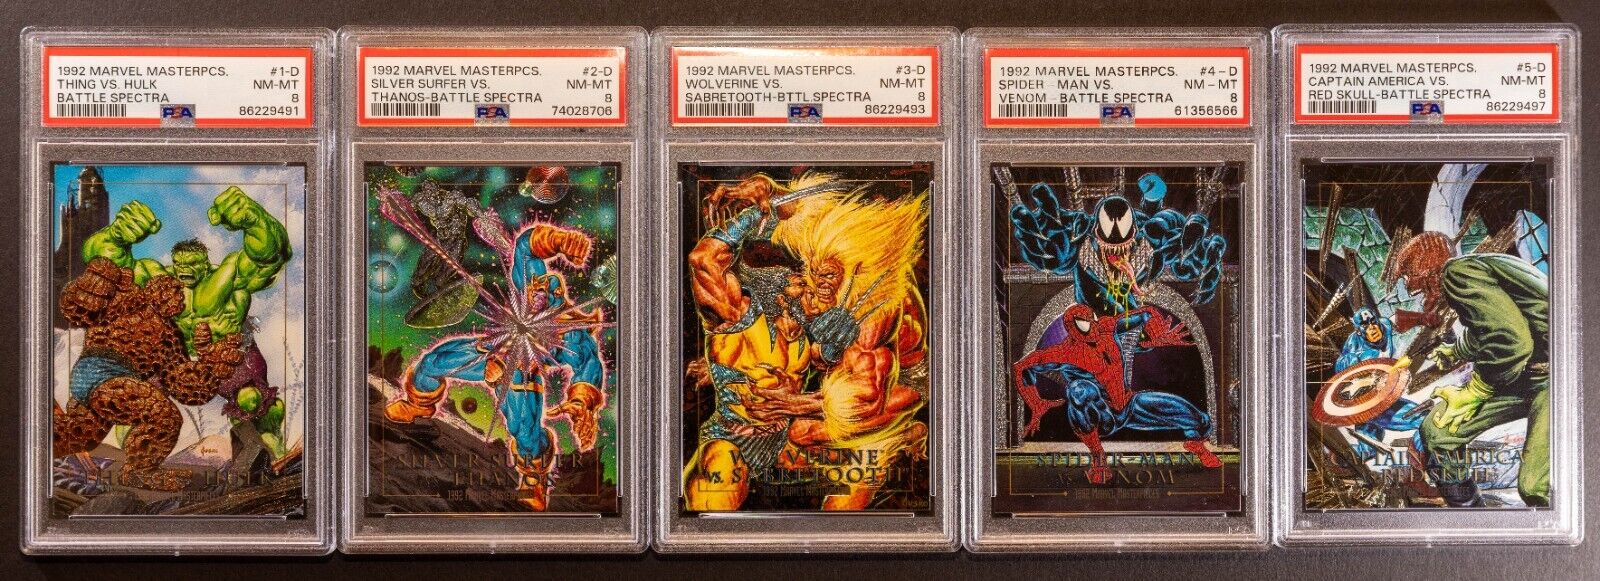 🔥🔥 1992 Marvel Masterpieces Battle Spectra - 5 Card PSA 8 Set Near Mint 🔥🔥